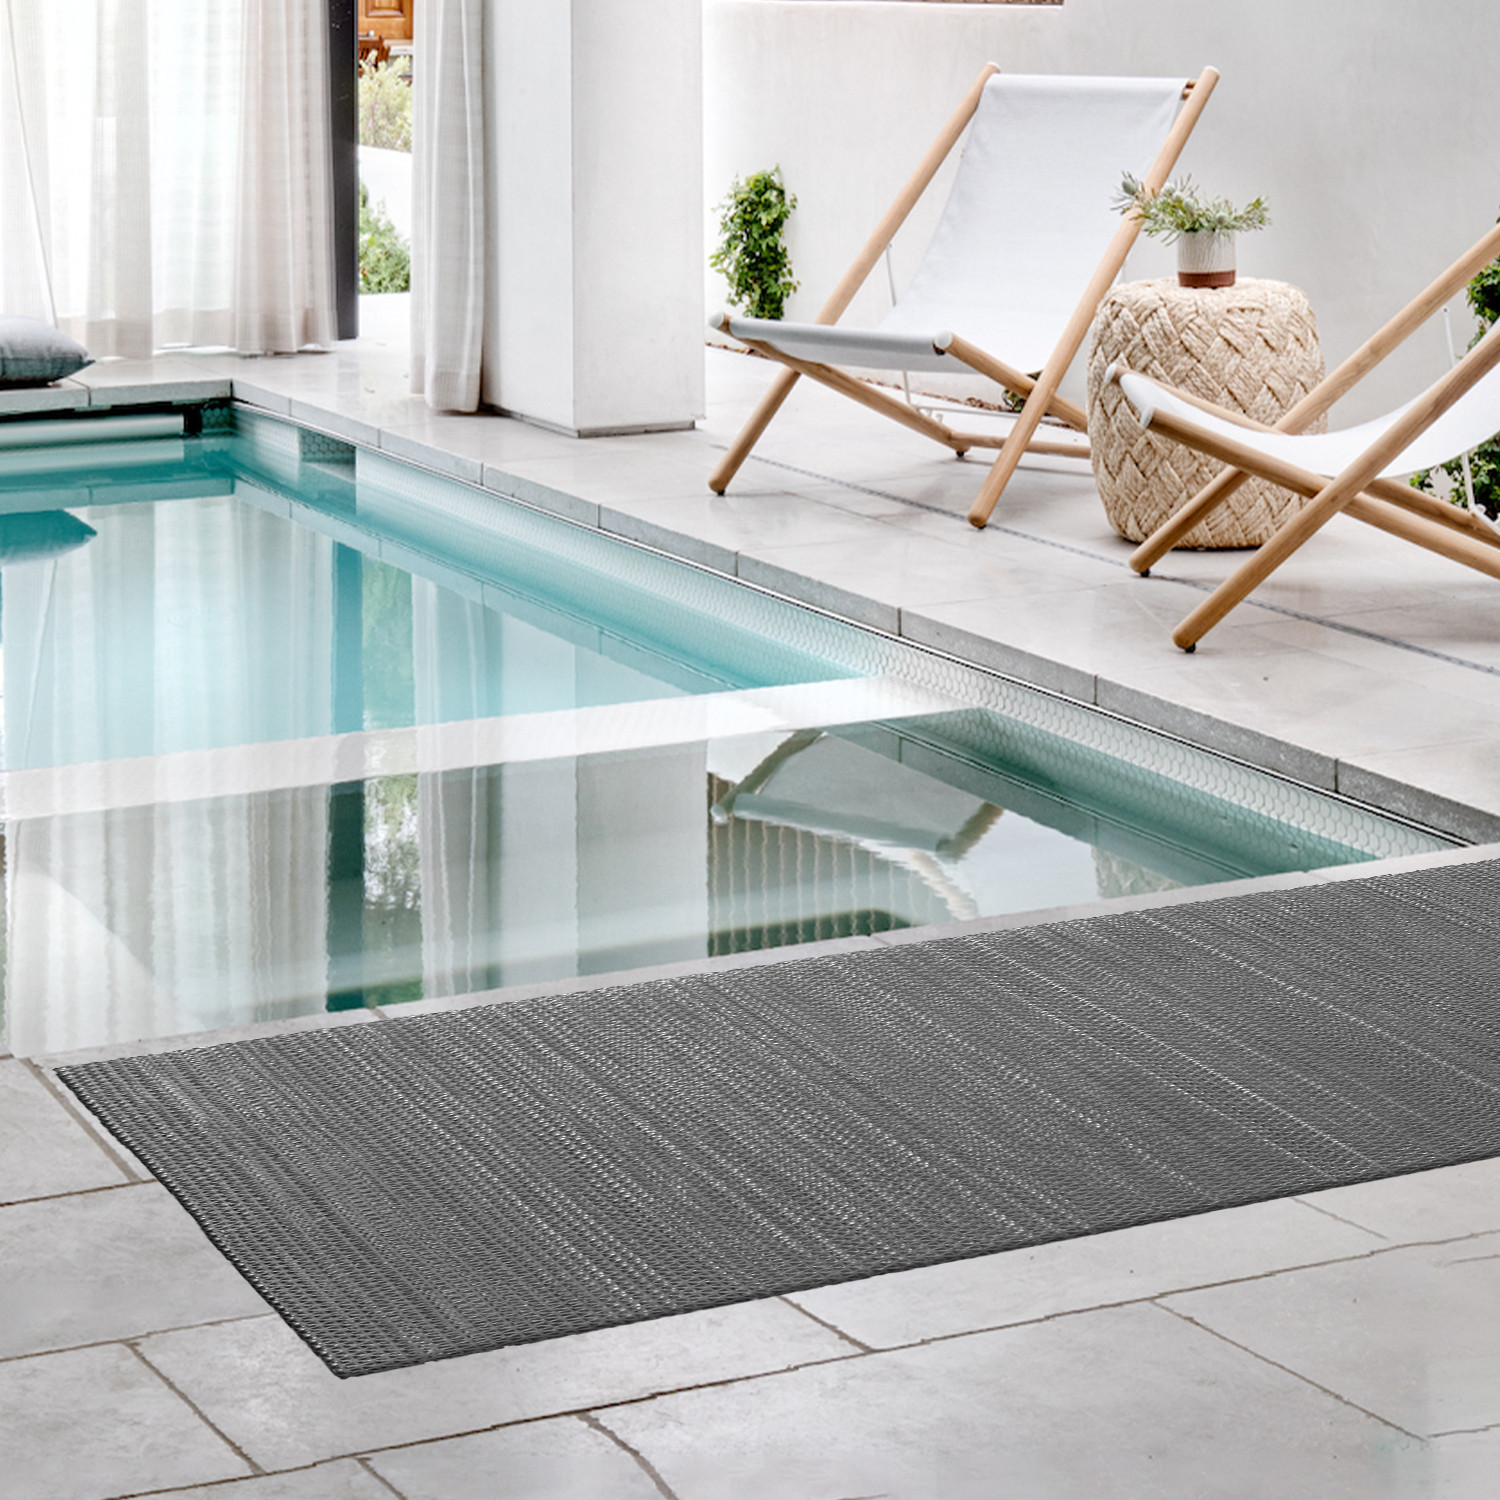 Kuber Industries Rubber Waterproof Anti-Skid Swimming Pool Mat|Shower Mat|Rainmat For Entrance Area,Bathroom,2 x 16 Feet (Gray)